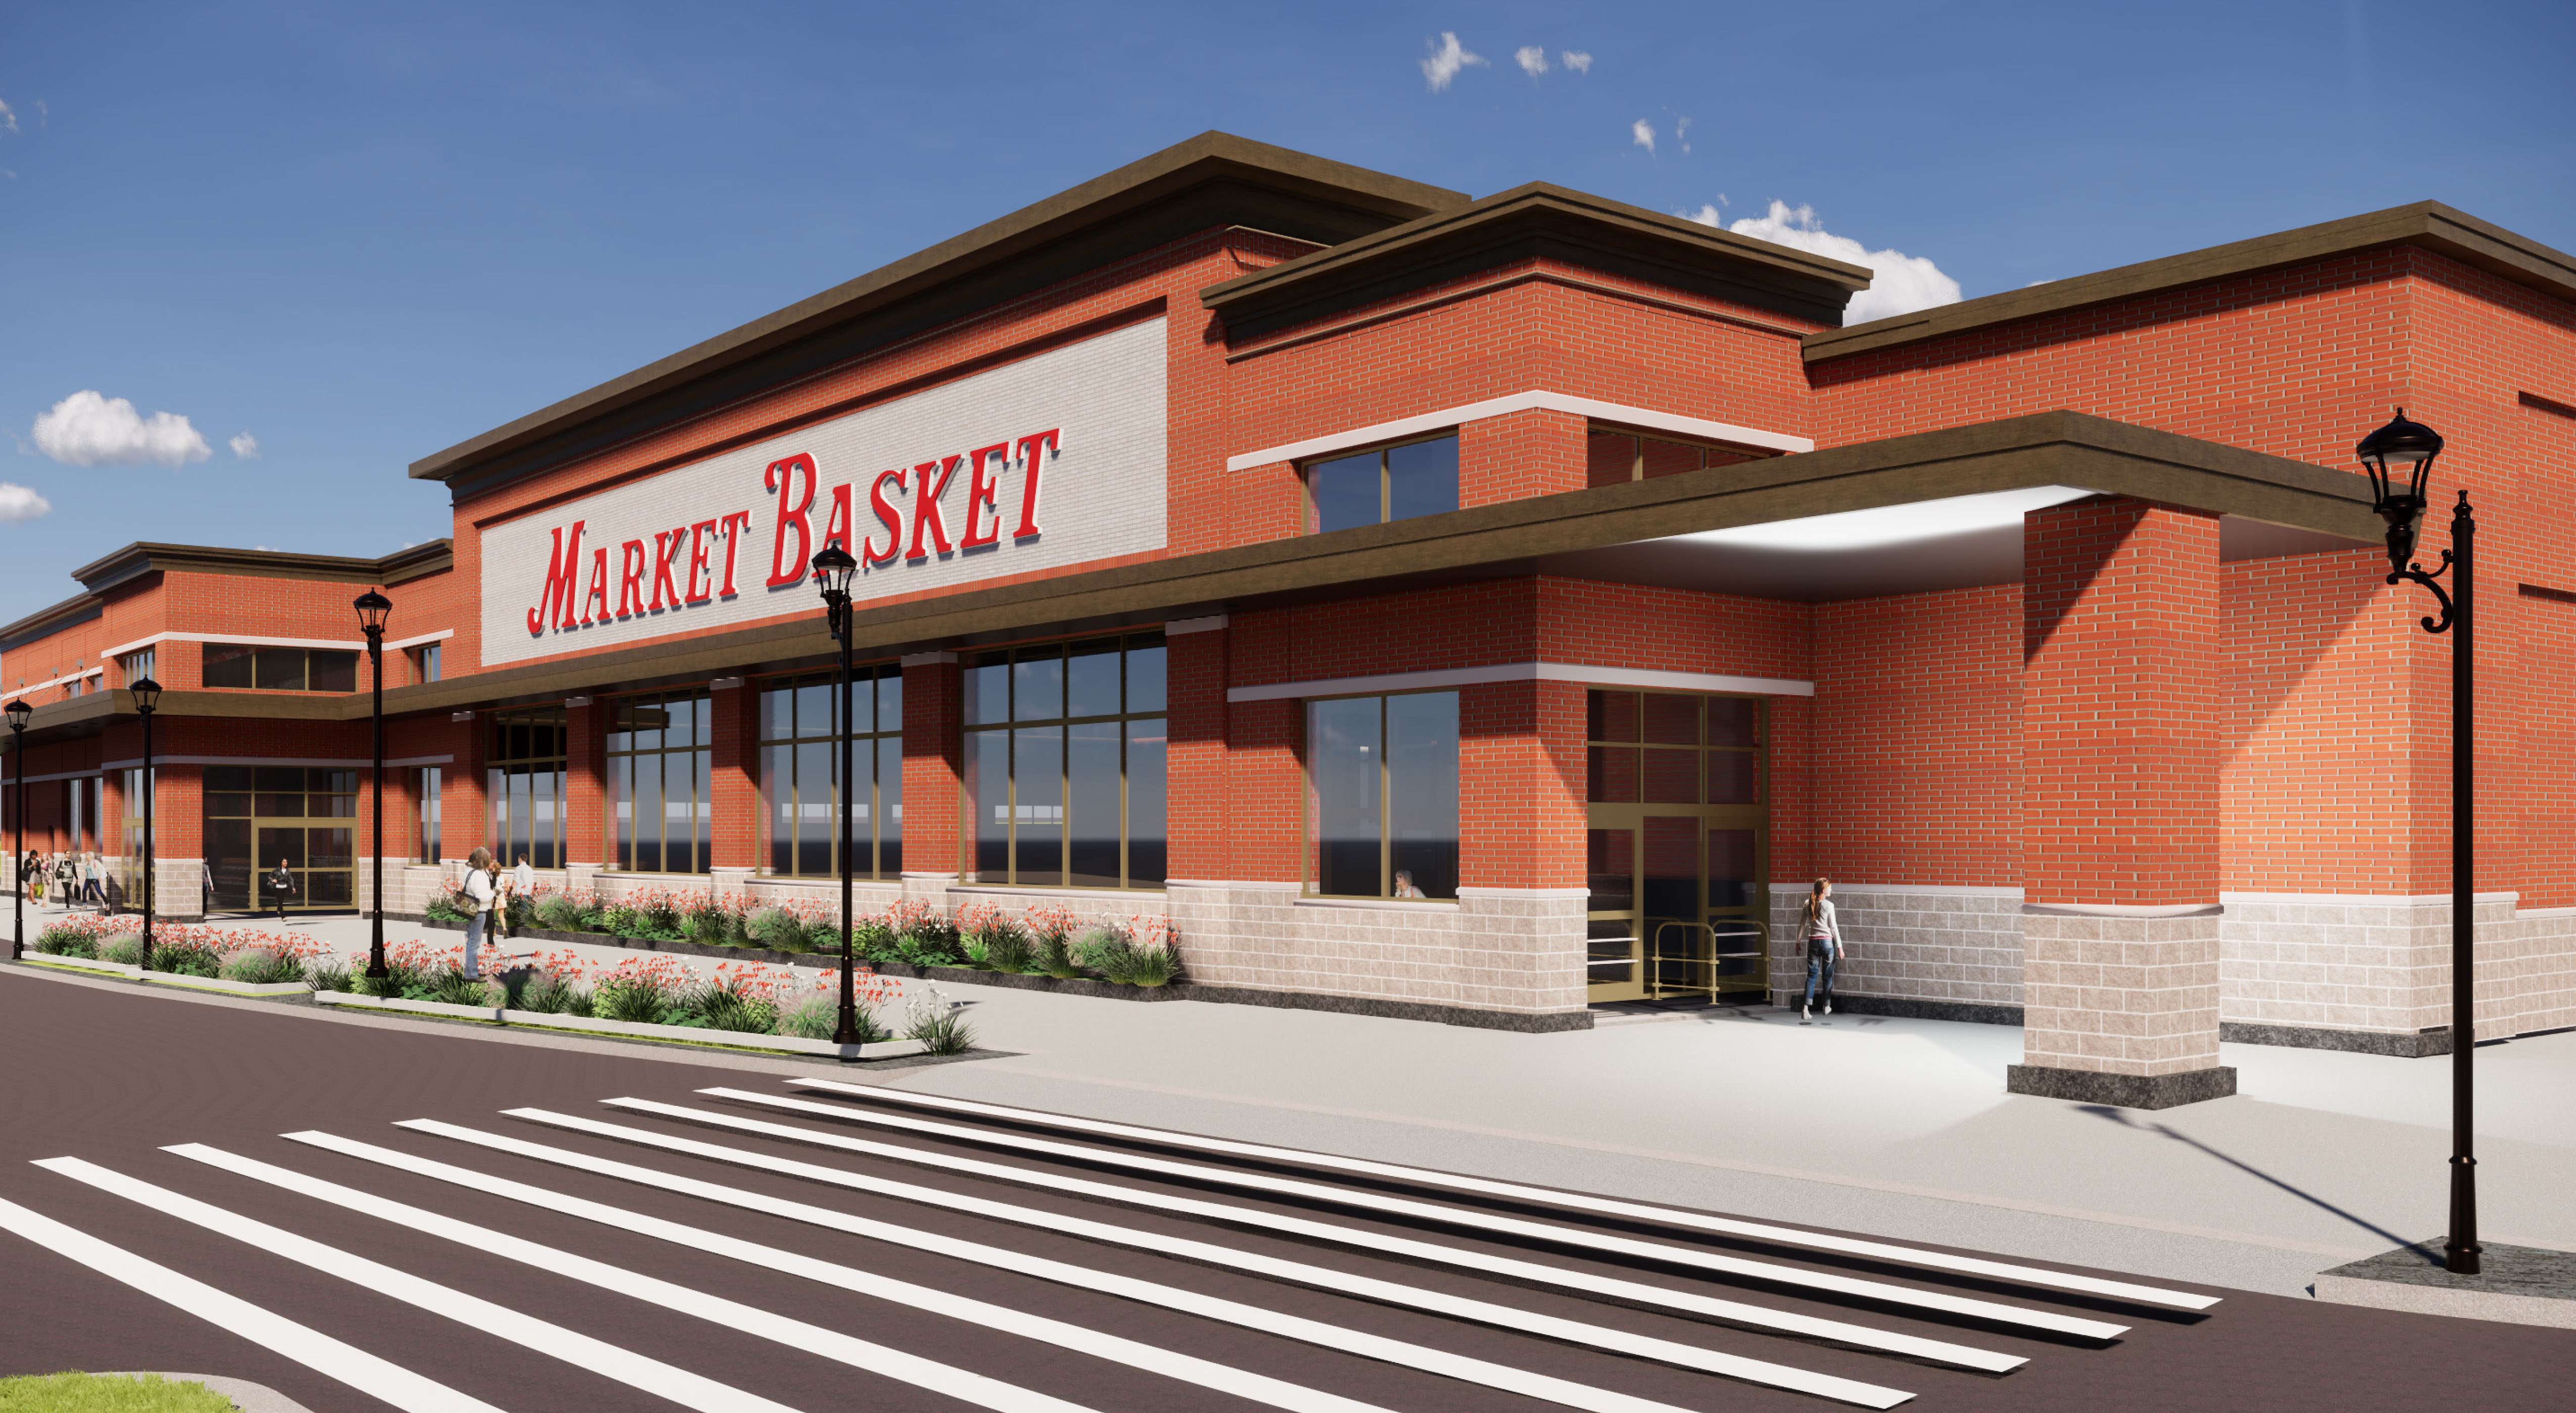 https://media.necn.com/2019/09/Market-Basket-Johnston-Rhode-Island.jpg?quality=85&strip=all&fit=5100%2C2797